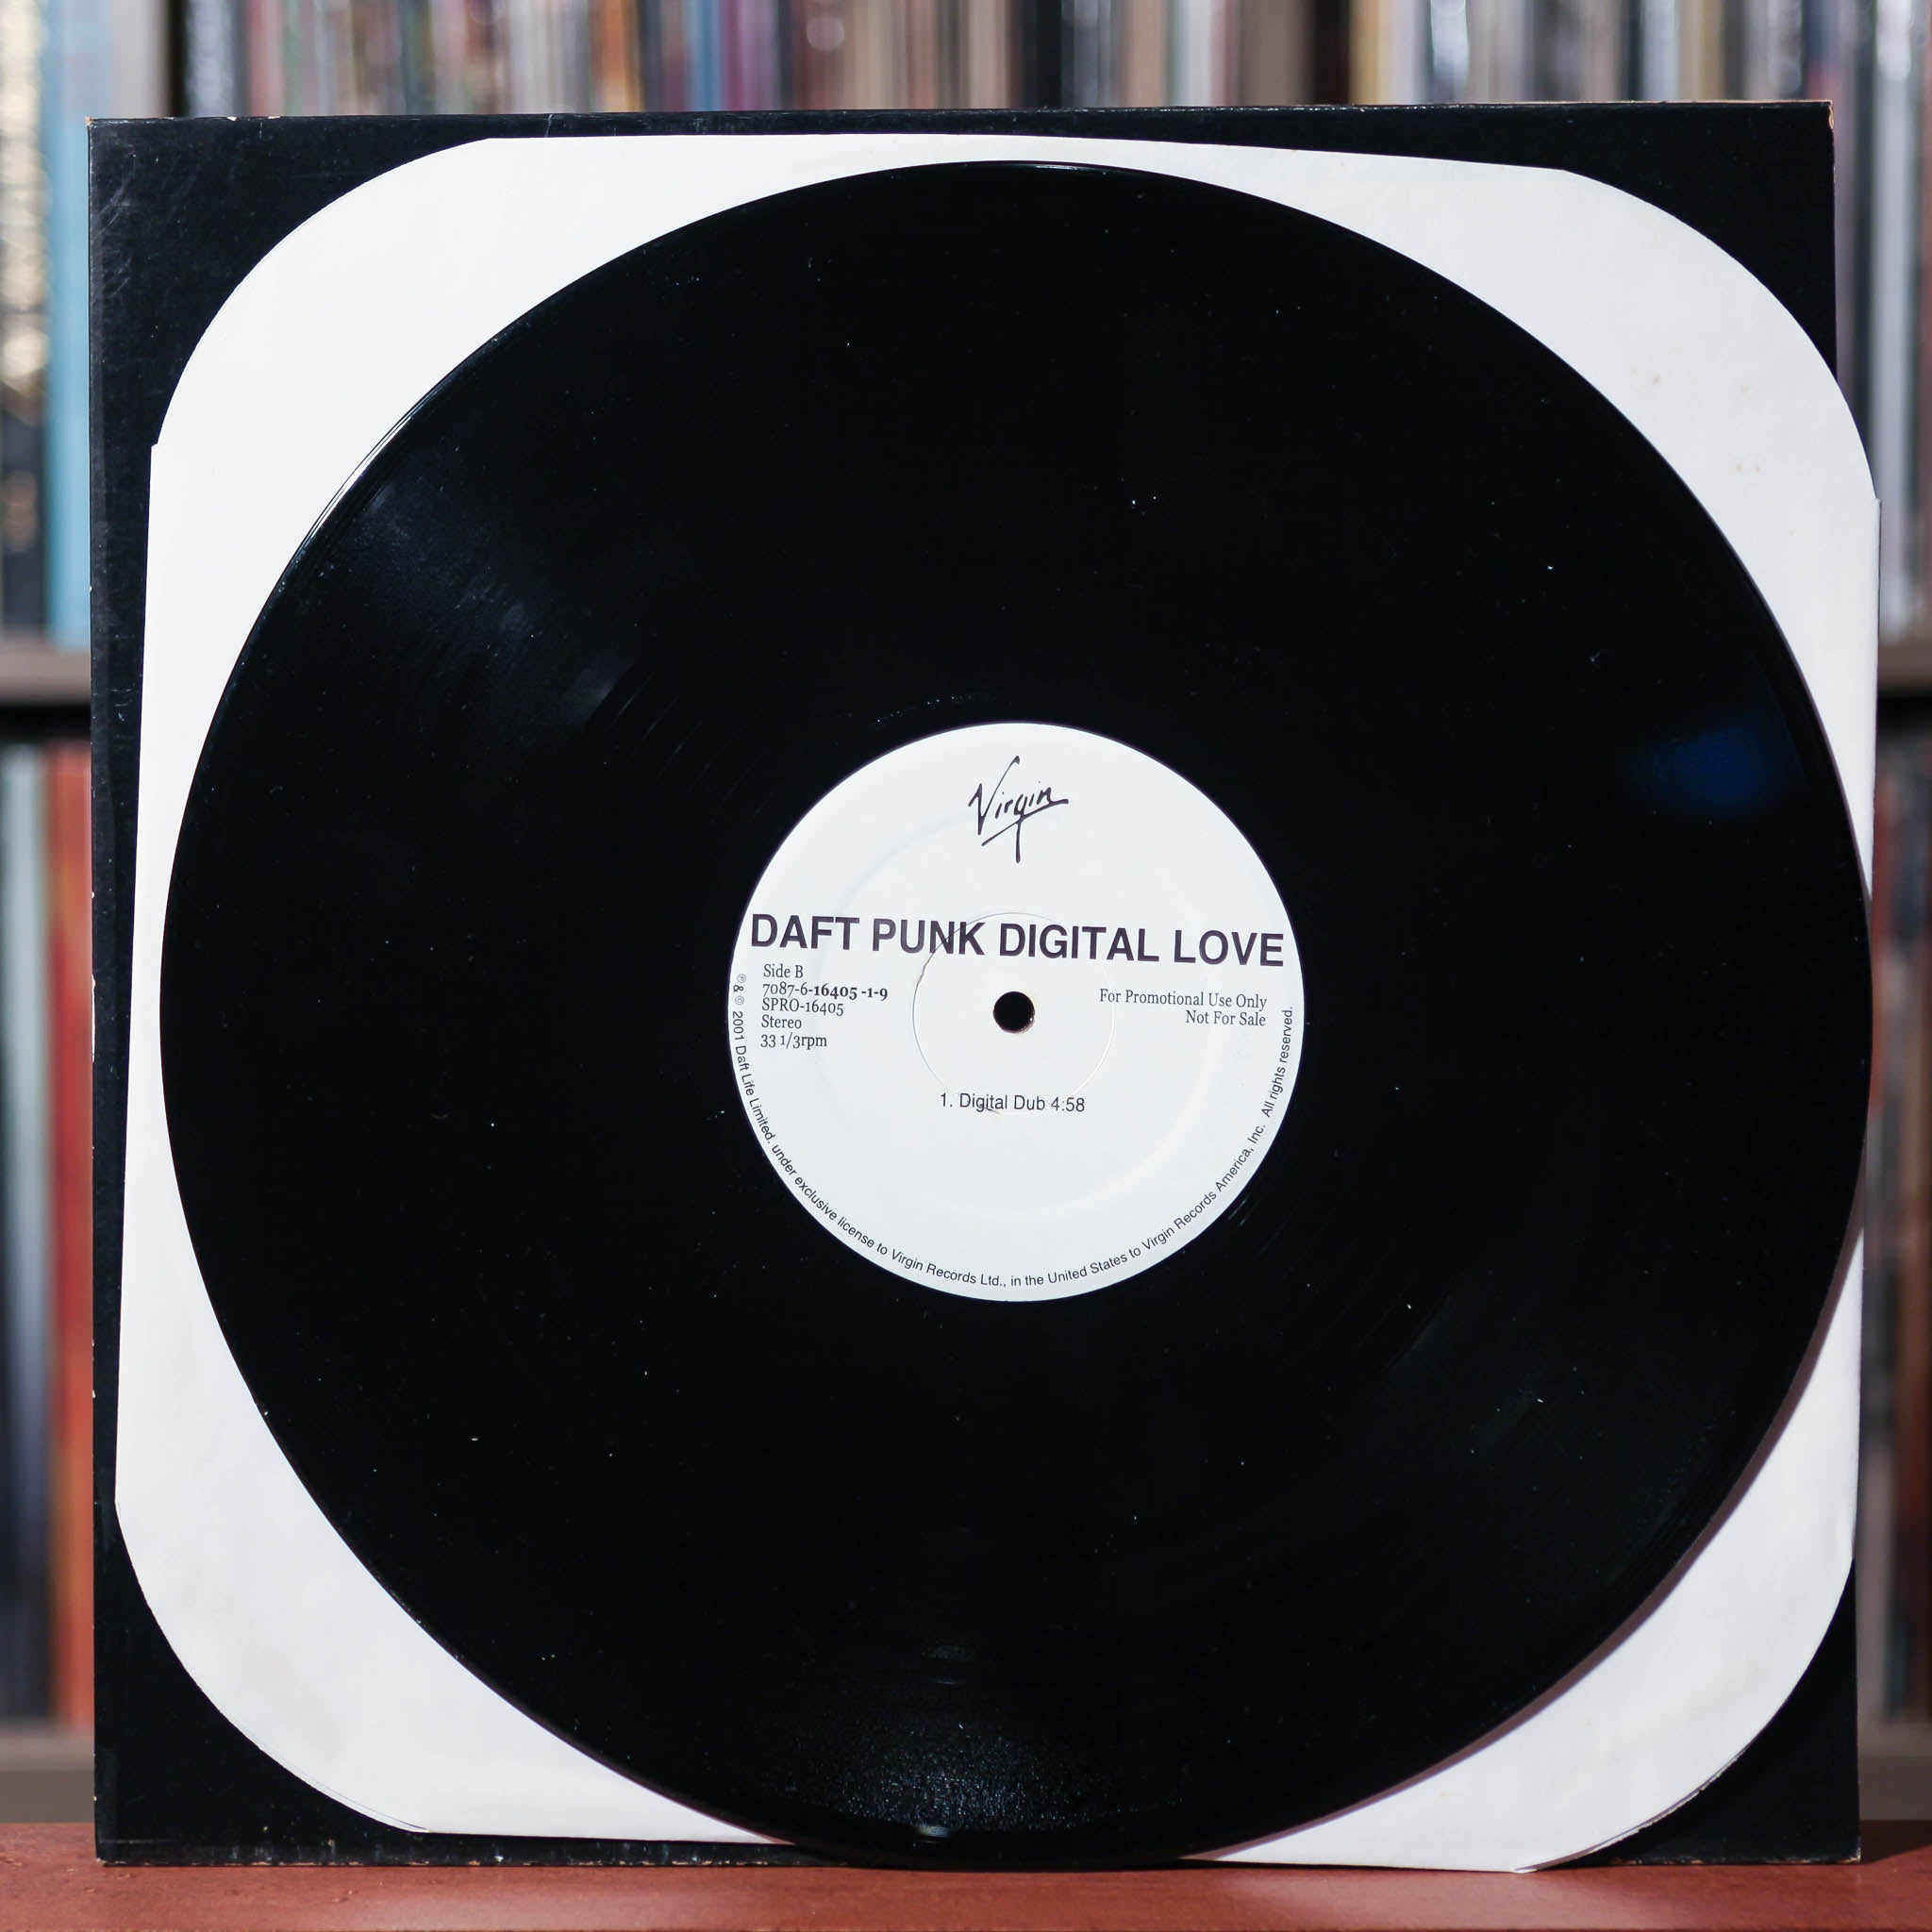 Daft Punk - Digital Love - 12 Single - Rare PROMO - 2001 Virgin, VG+/